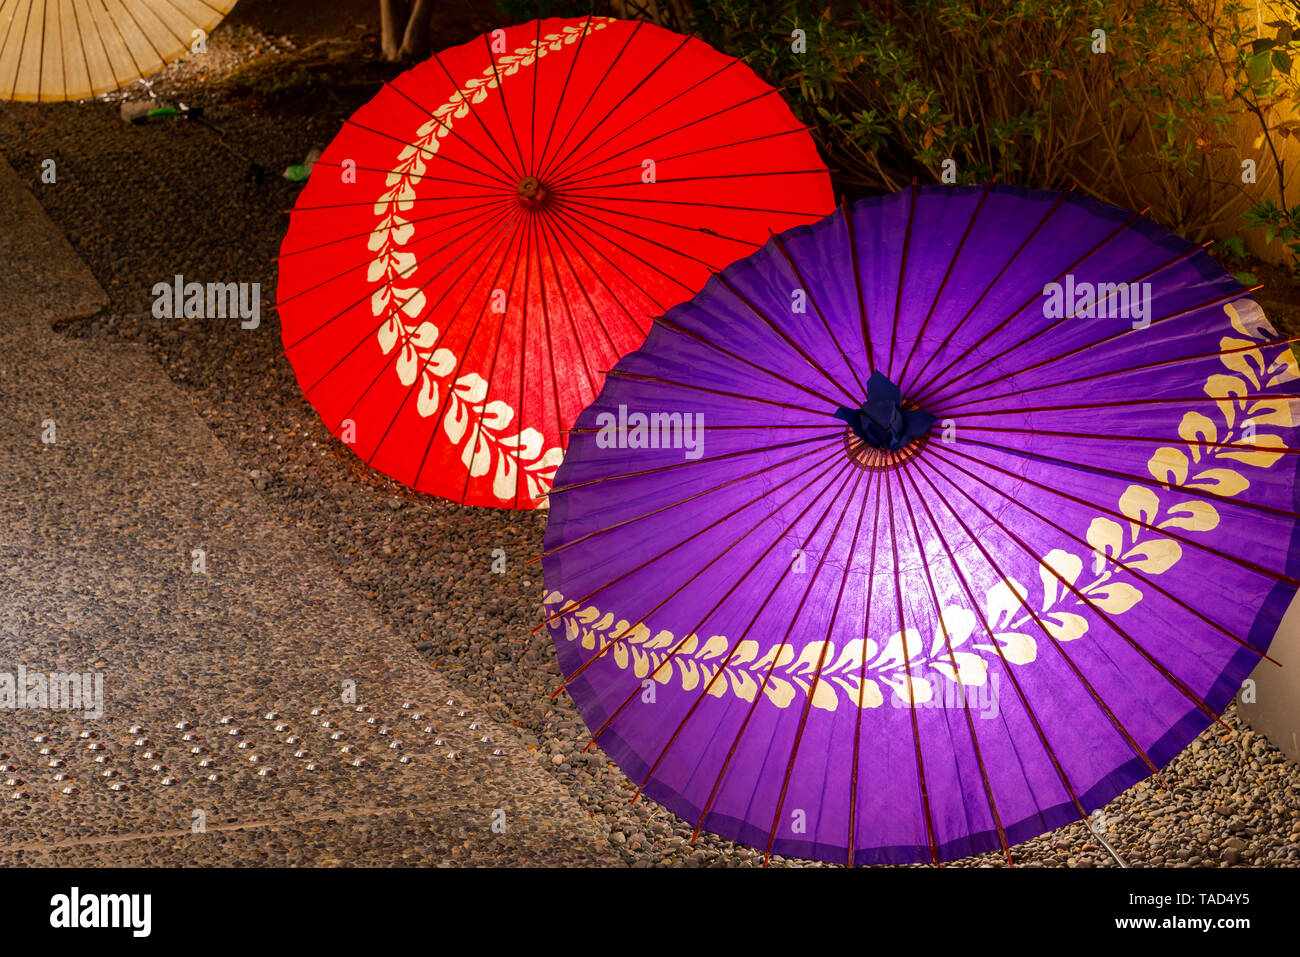 Paraguas japonés en Kyoto, Japón. Imagen de la cultura japonesa. Foto de stock